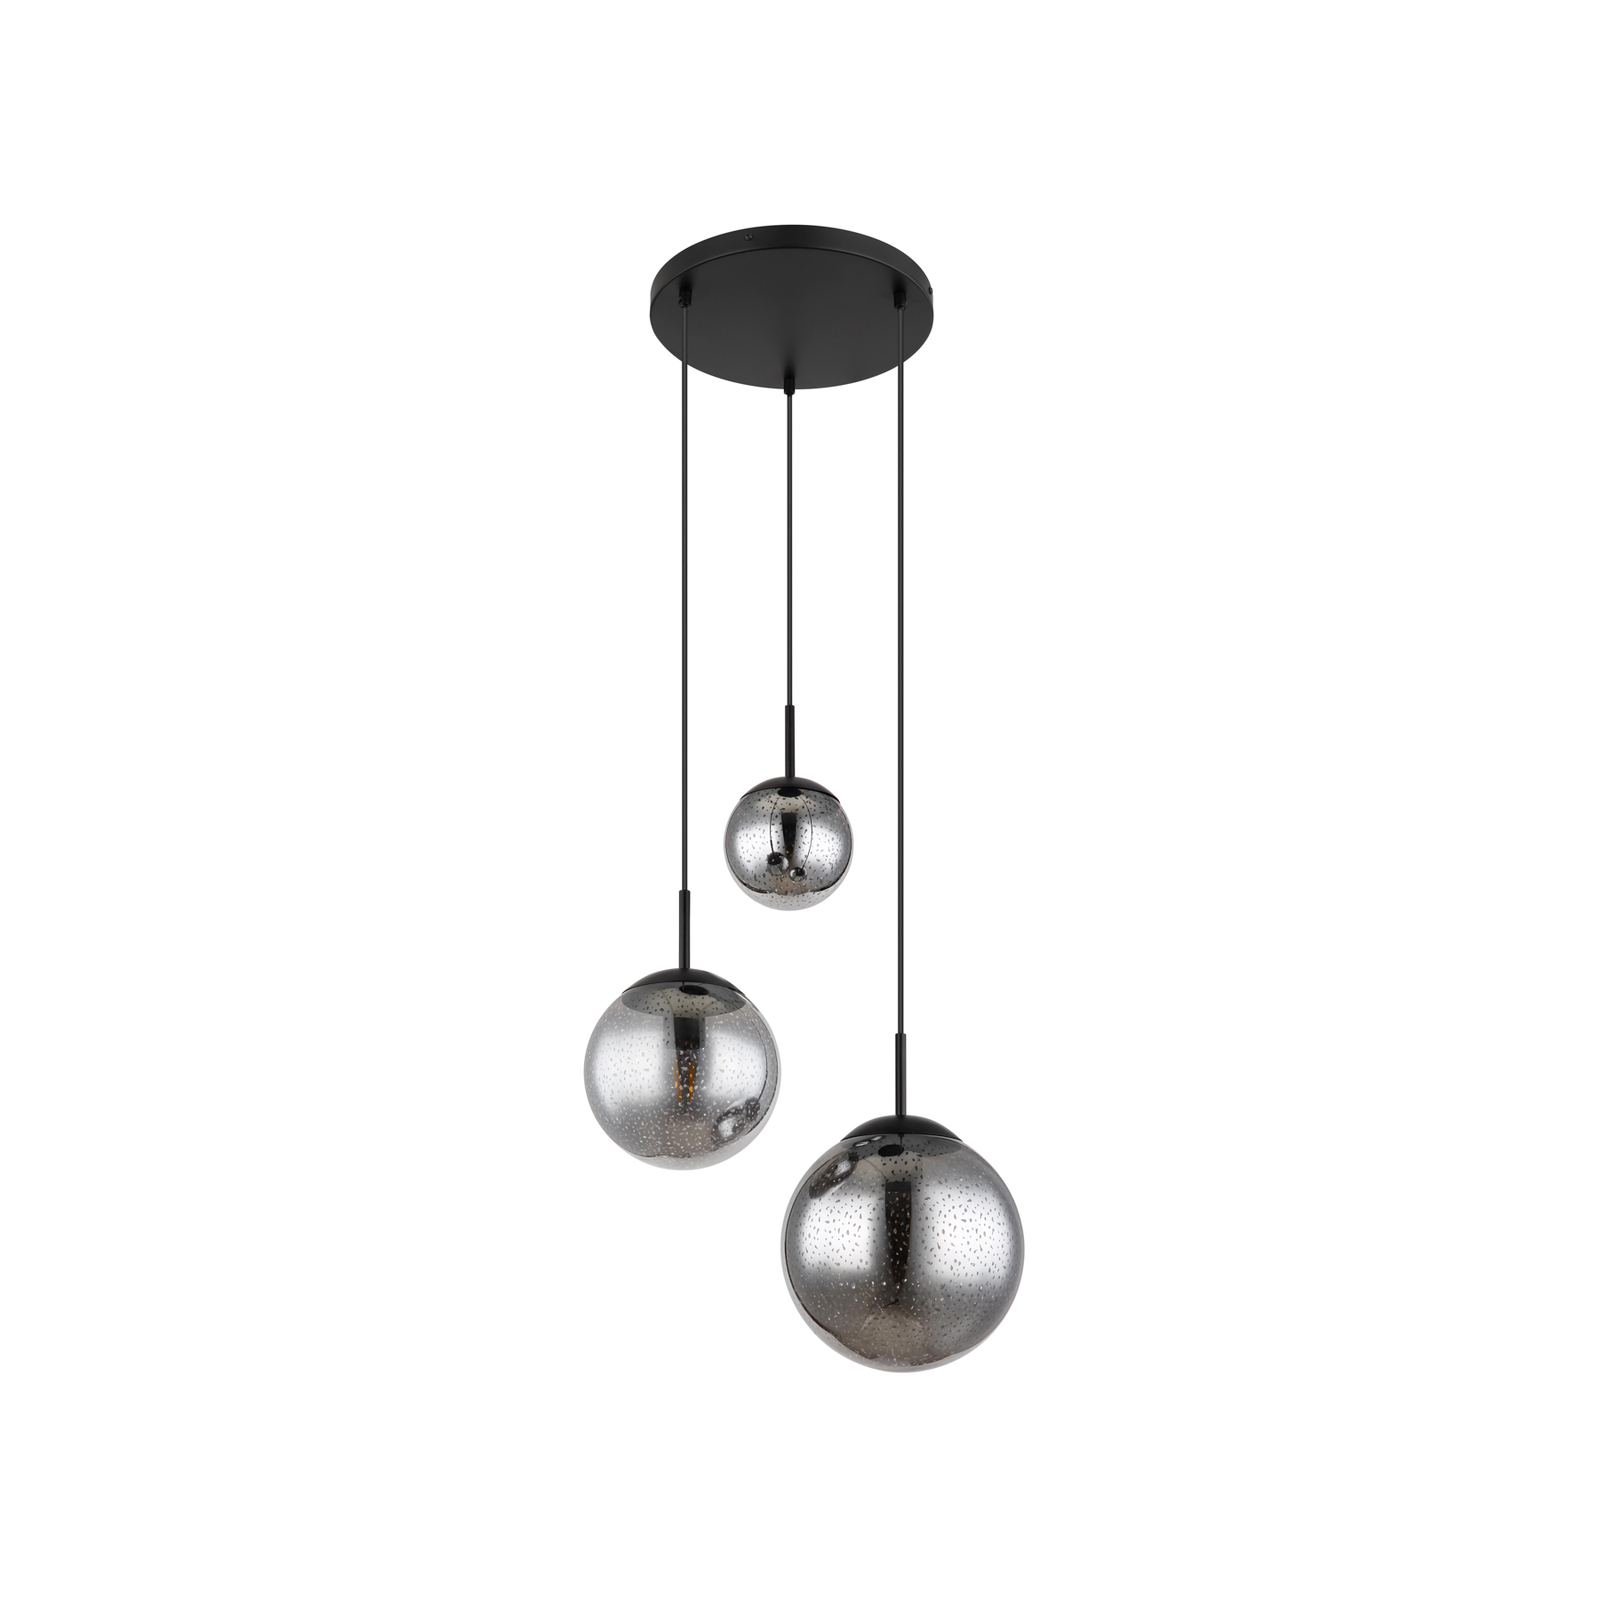 Samos pendant light, Ø 46.5 cm, smoke grey, 3-bulb, glass